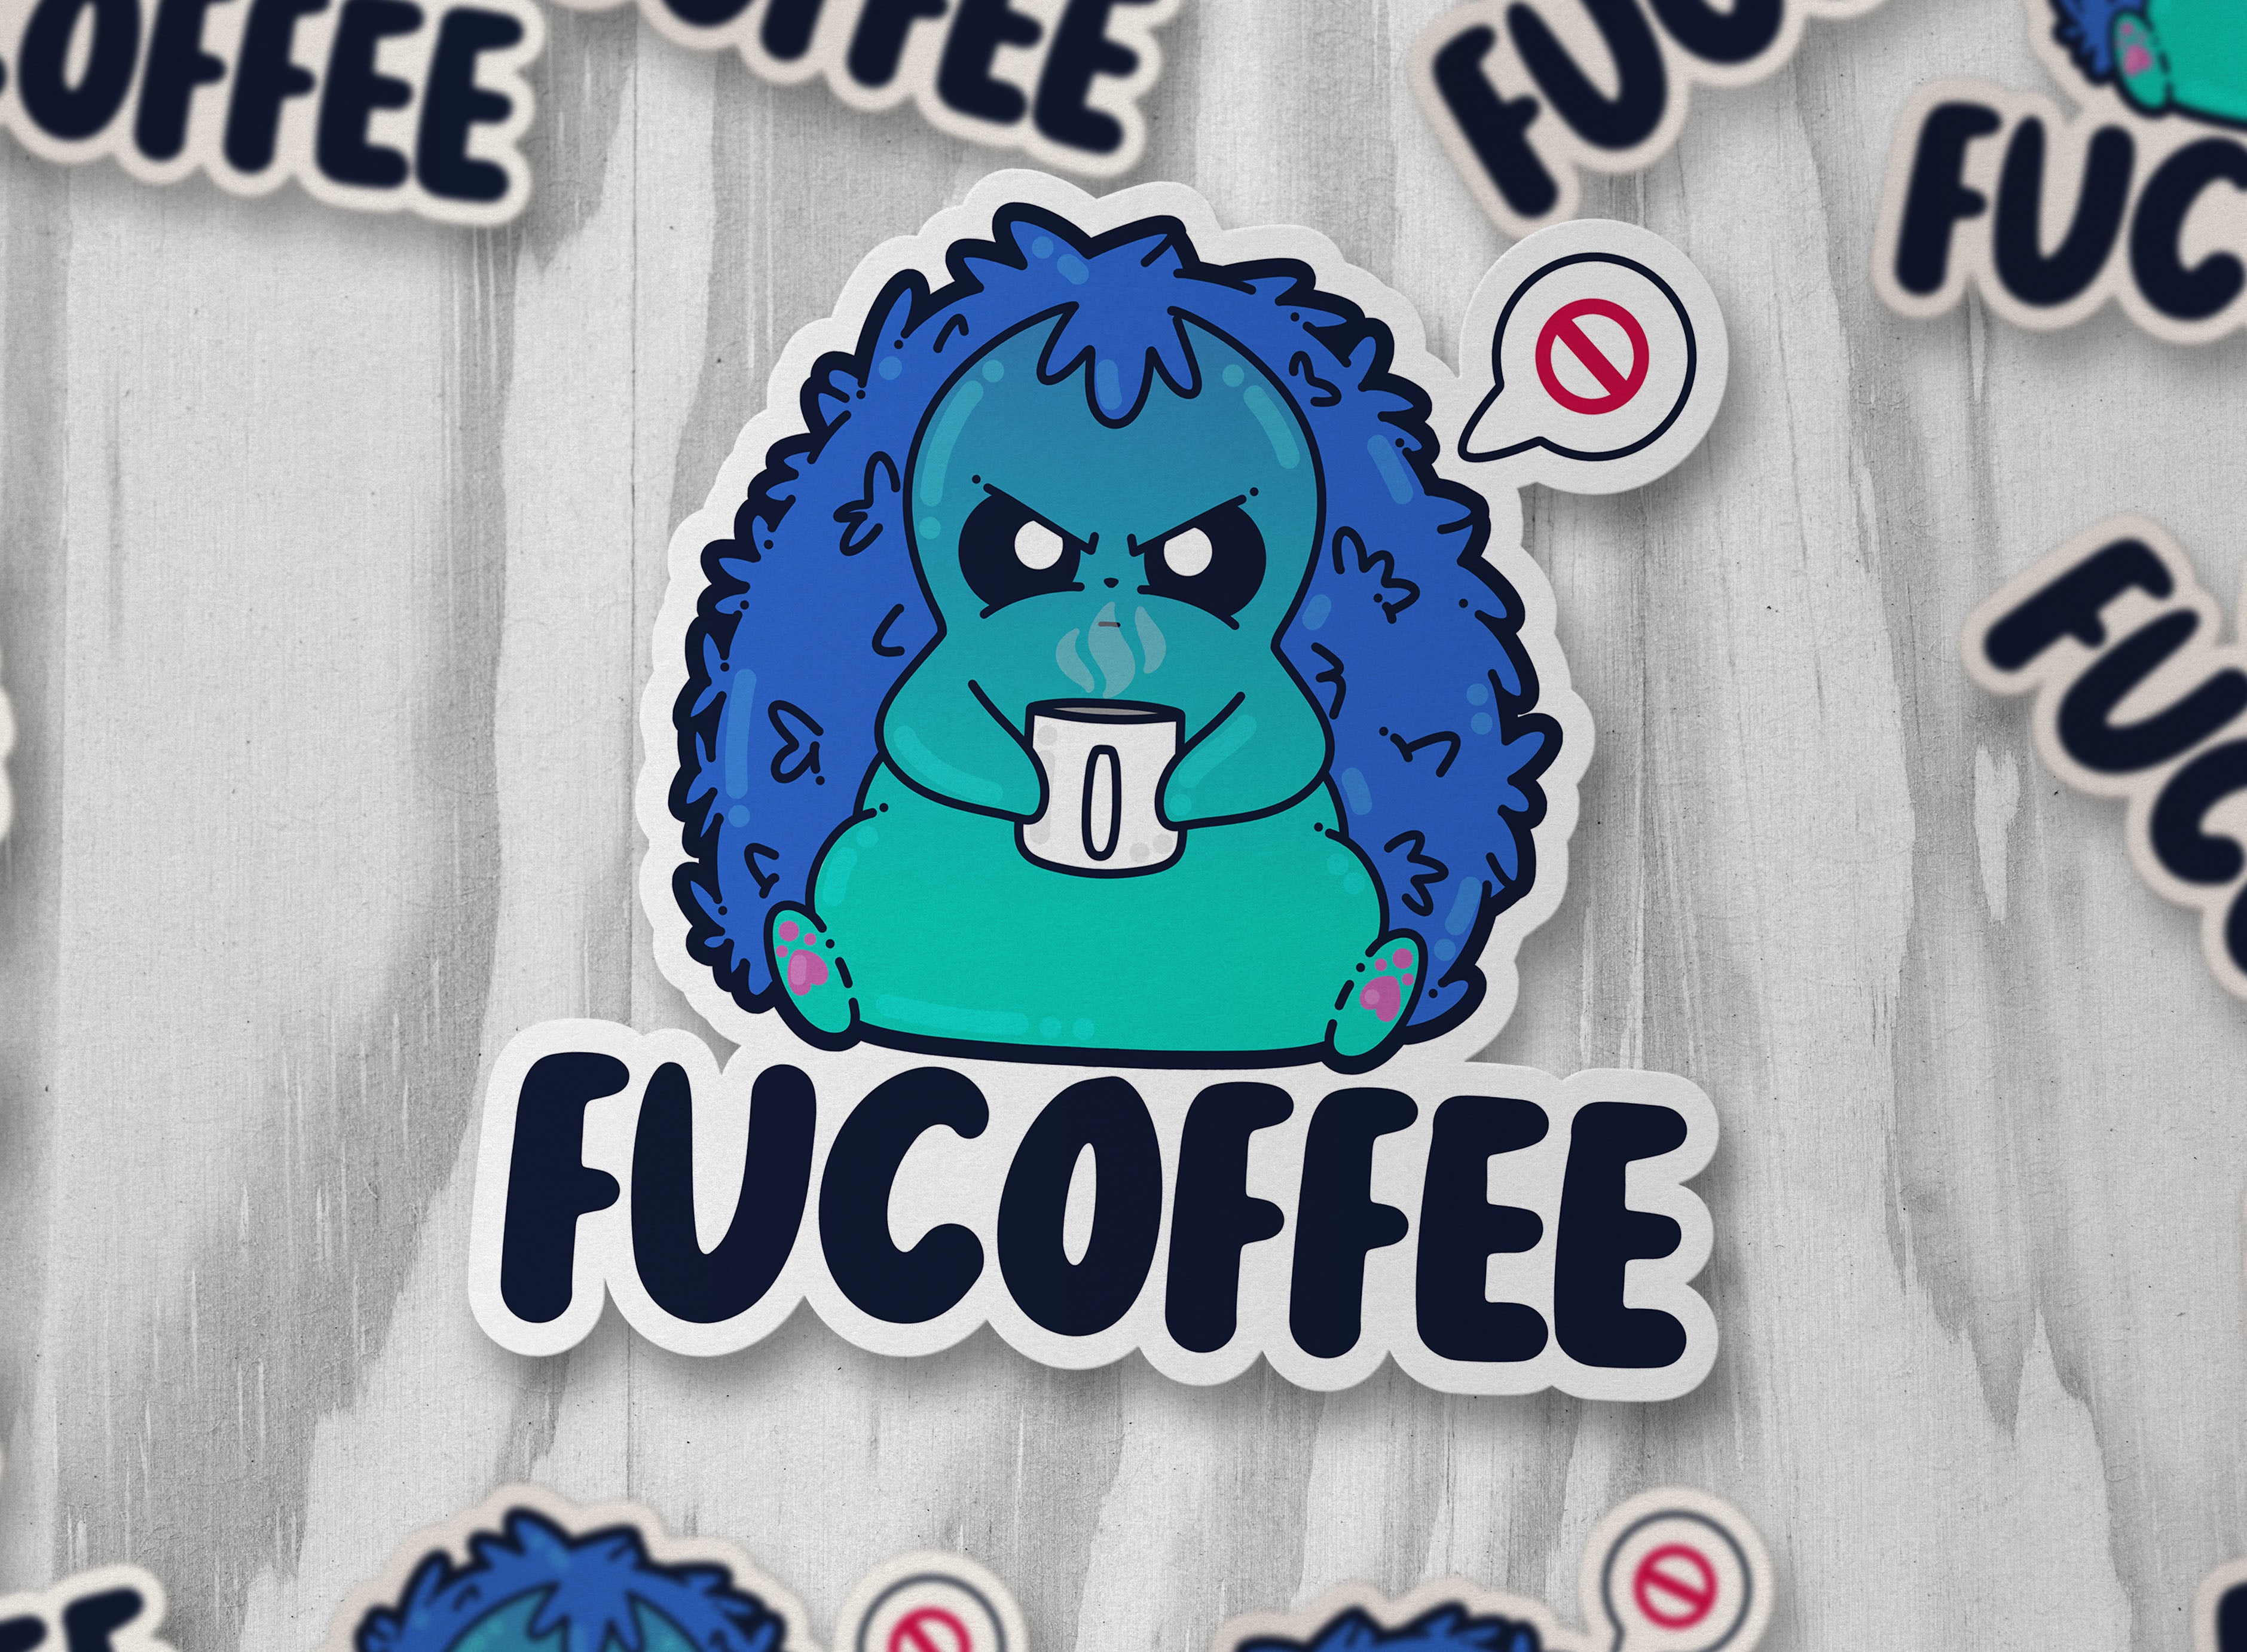 Fucoffee - ChubbleGumLLC